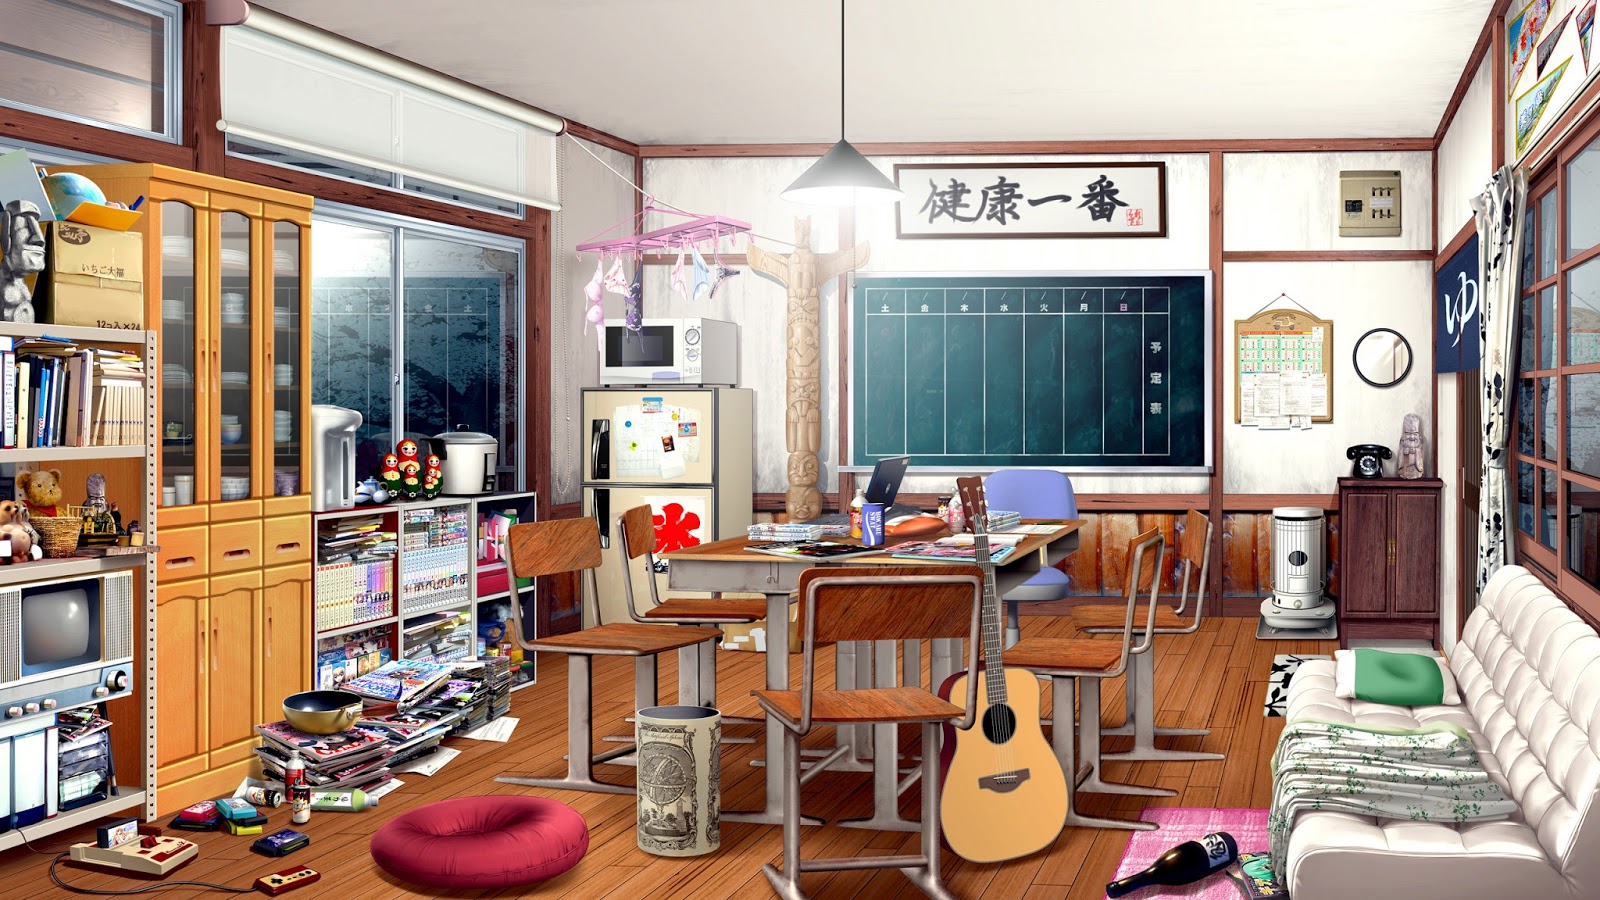 Anime Bedroom Scenery Wallpapers